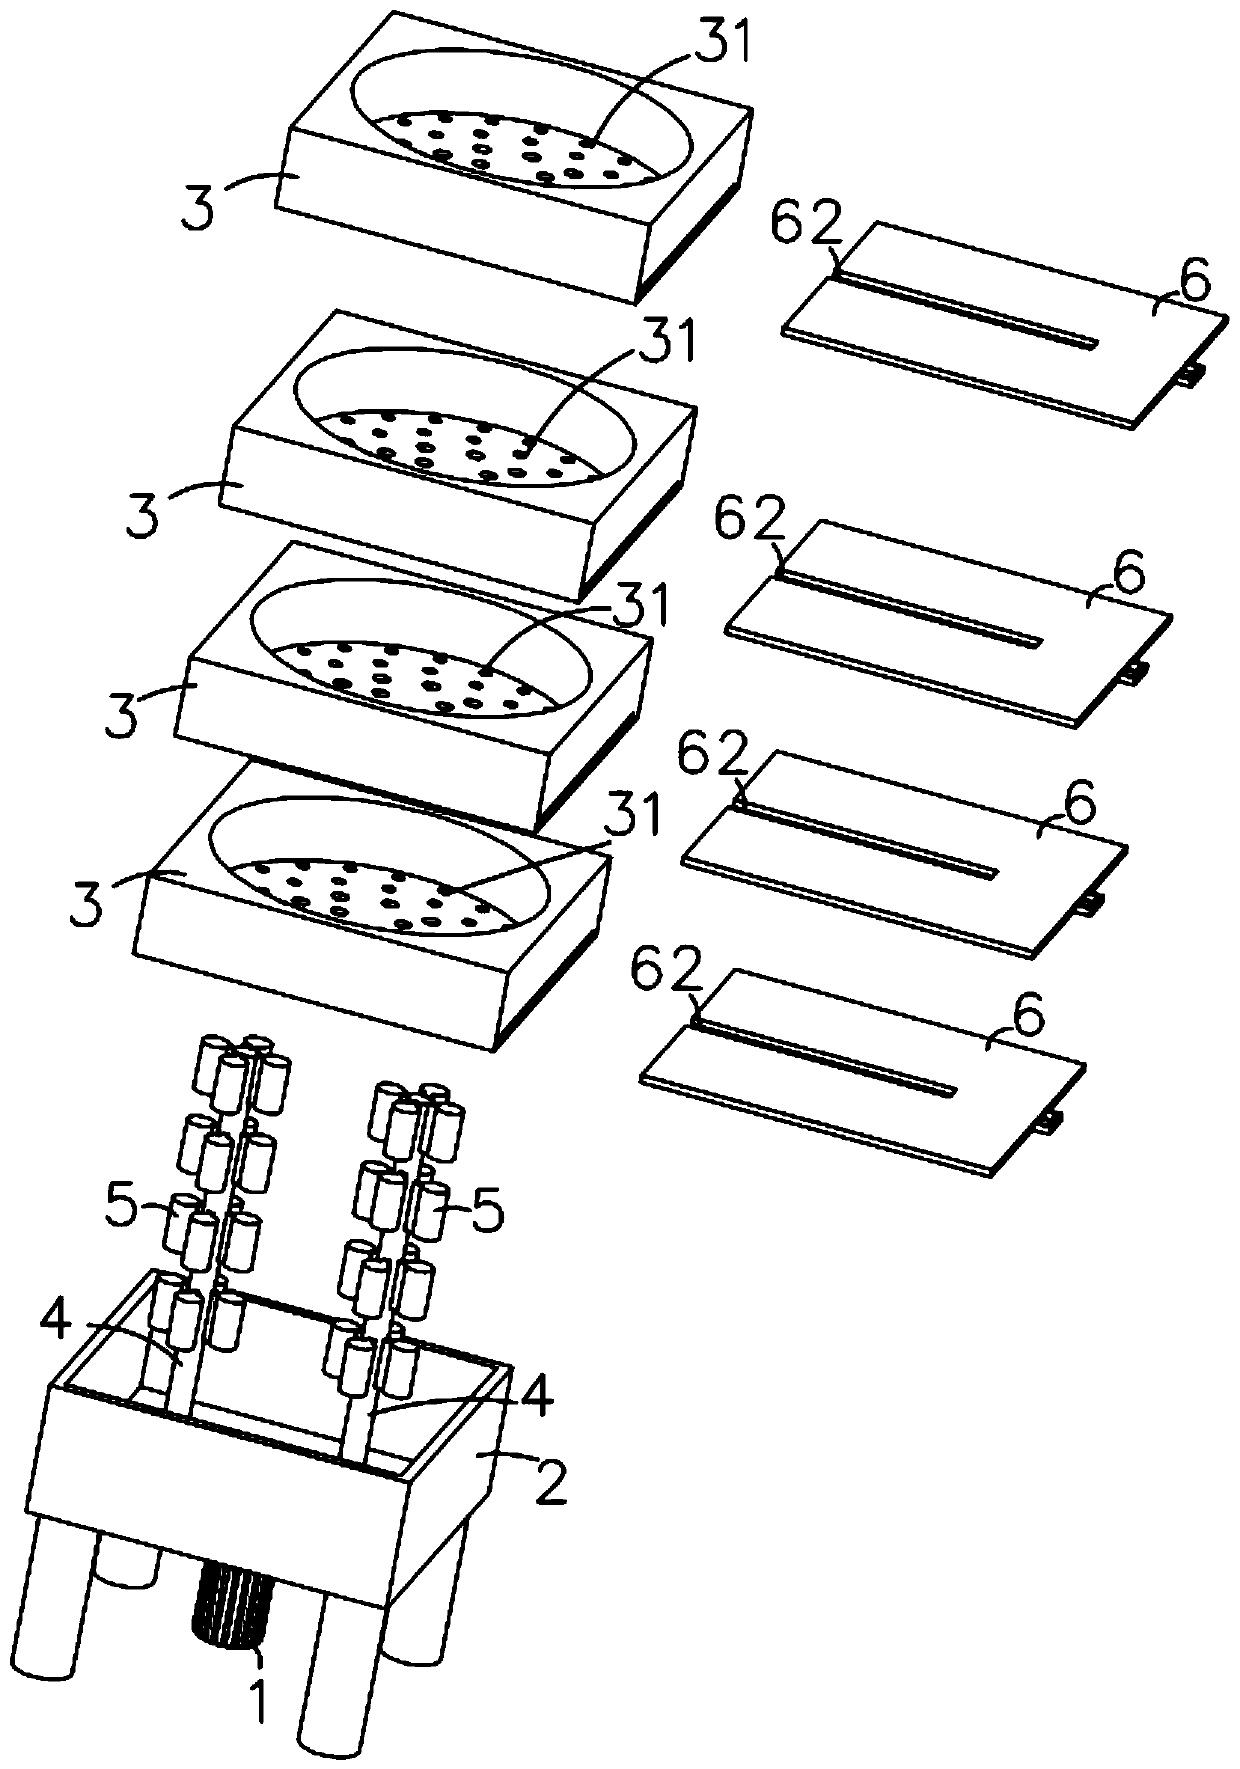 Myrica rubra kernel polishing device used for shoe-pad manufacturing